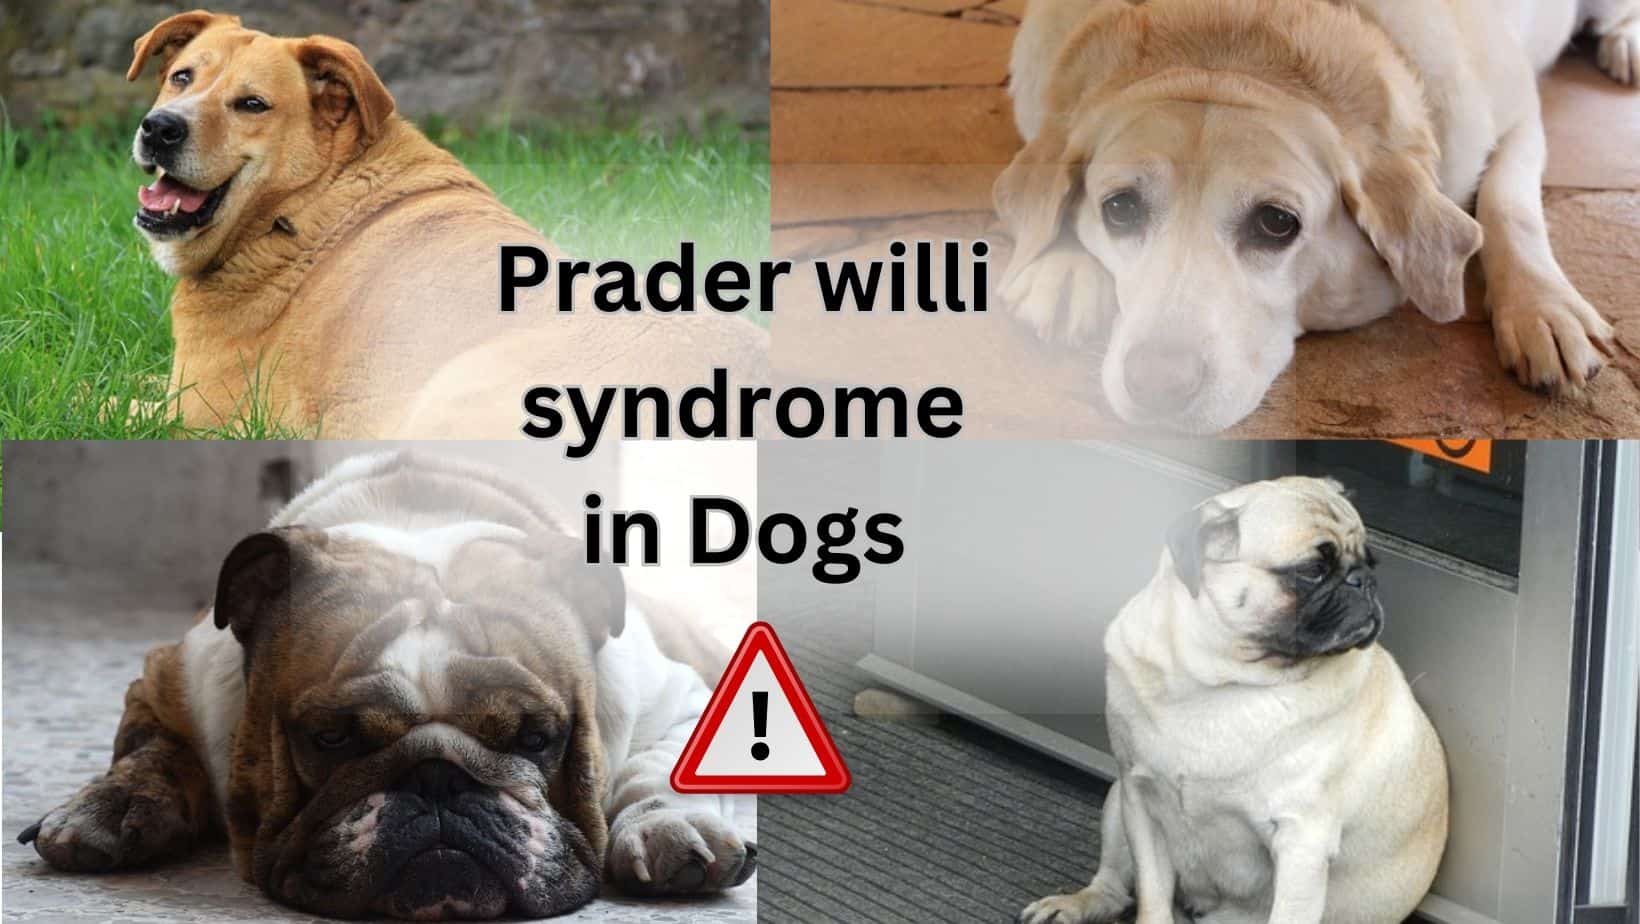 prader willi syndrome in dogs